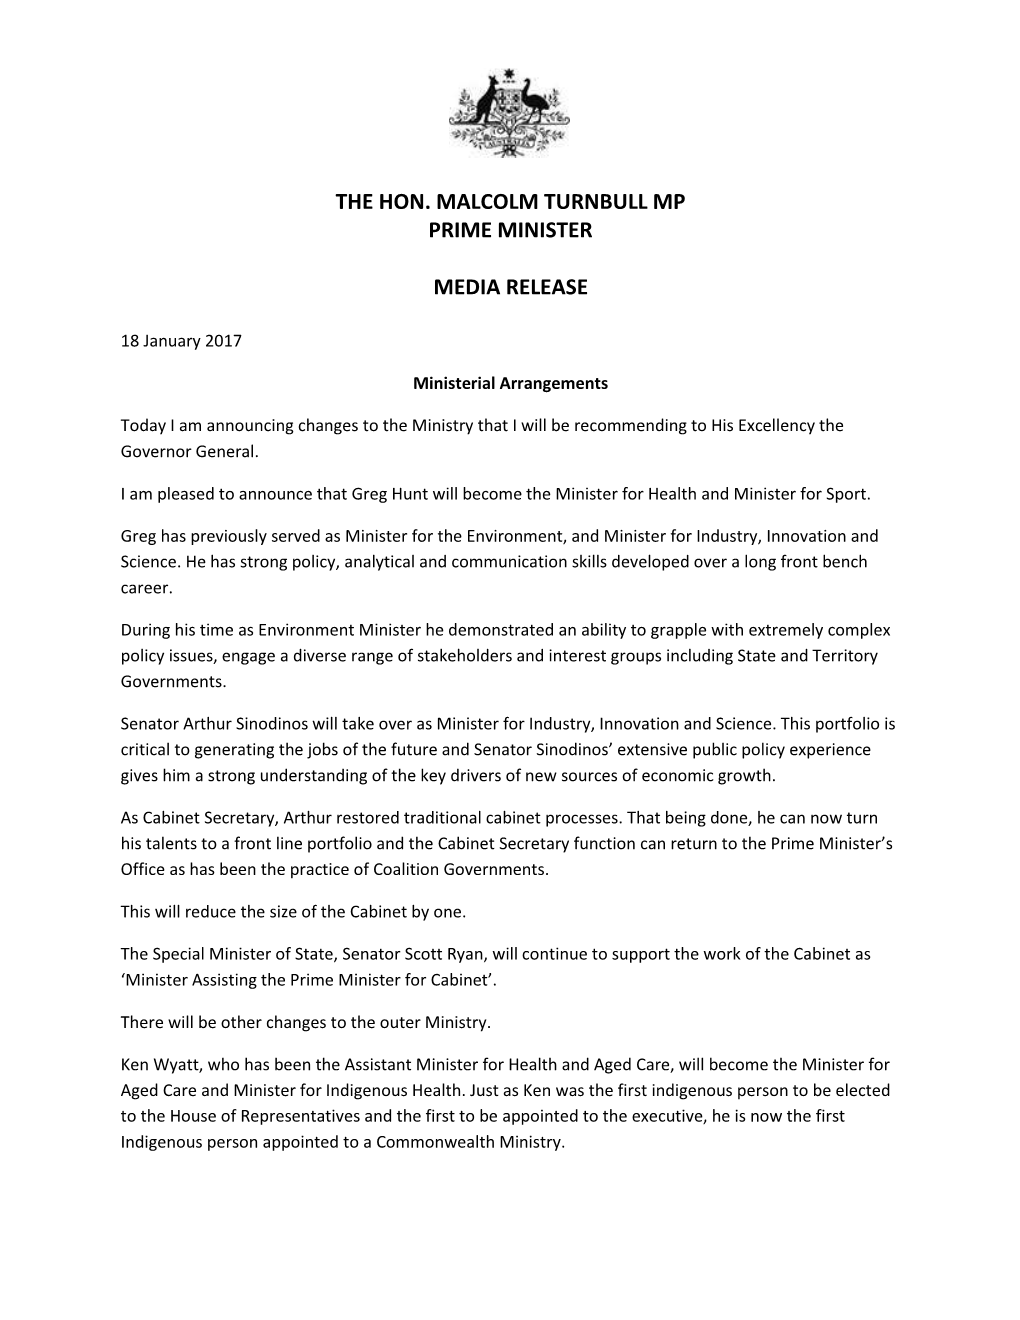 The Hon. Malcolm Turnbull Mp Prime Minister Media